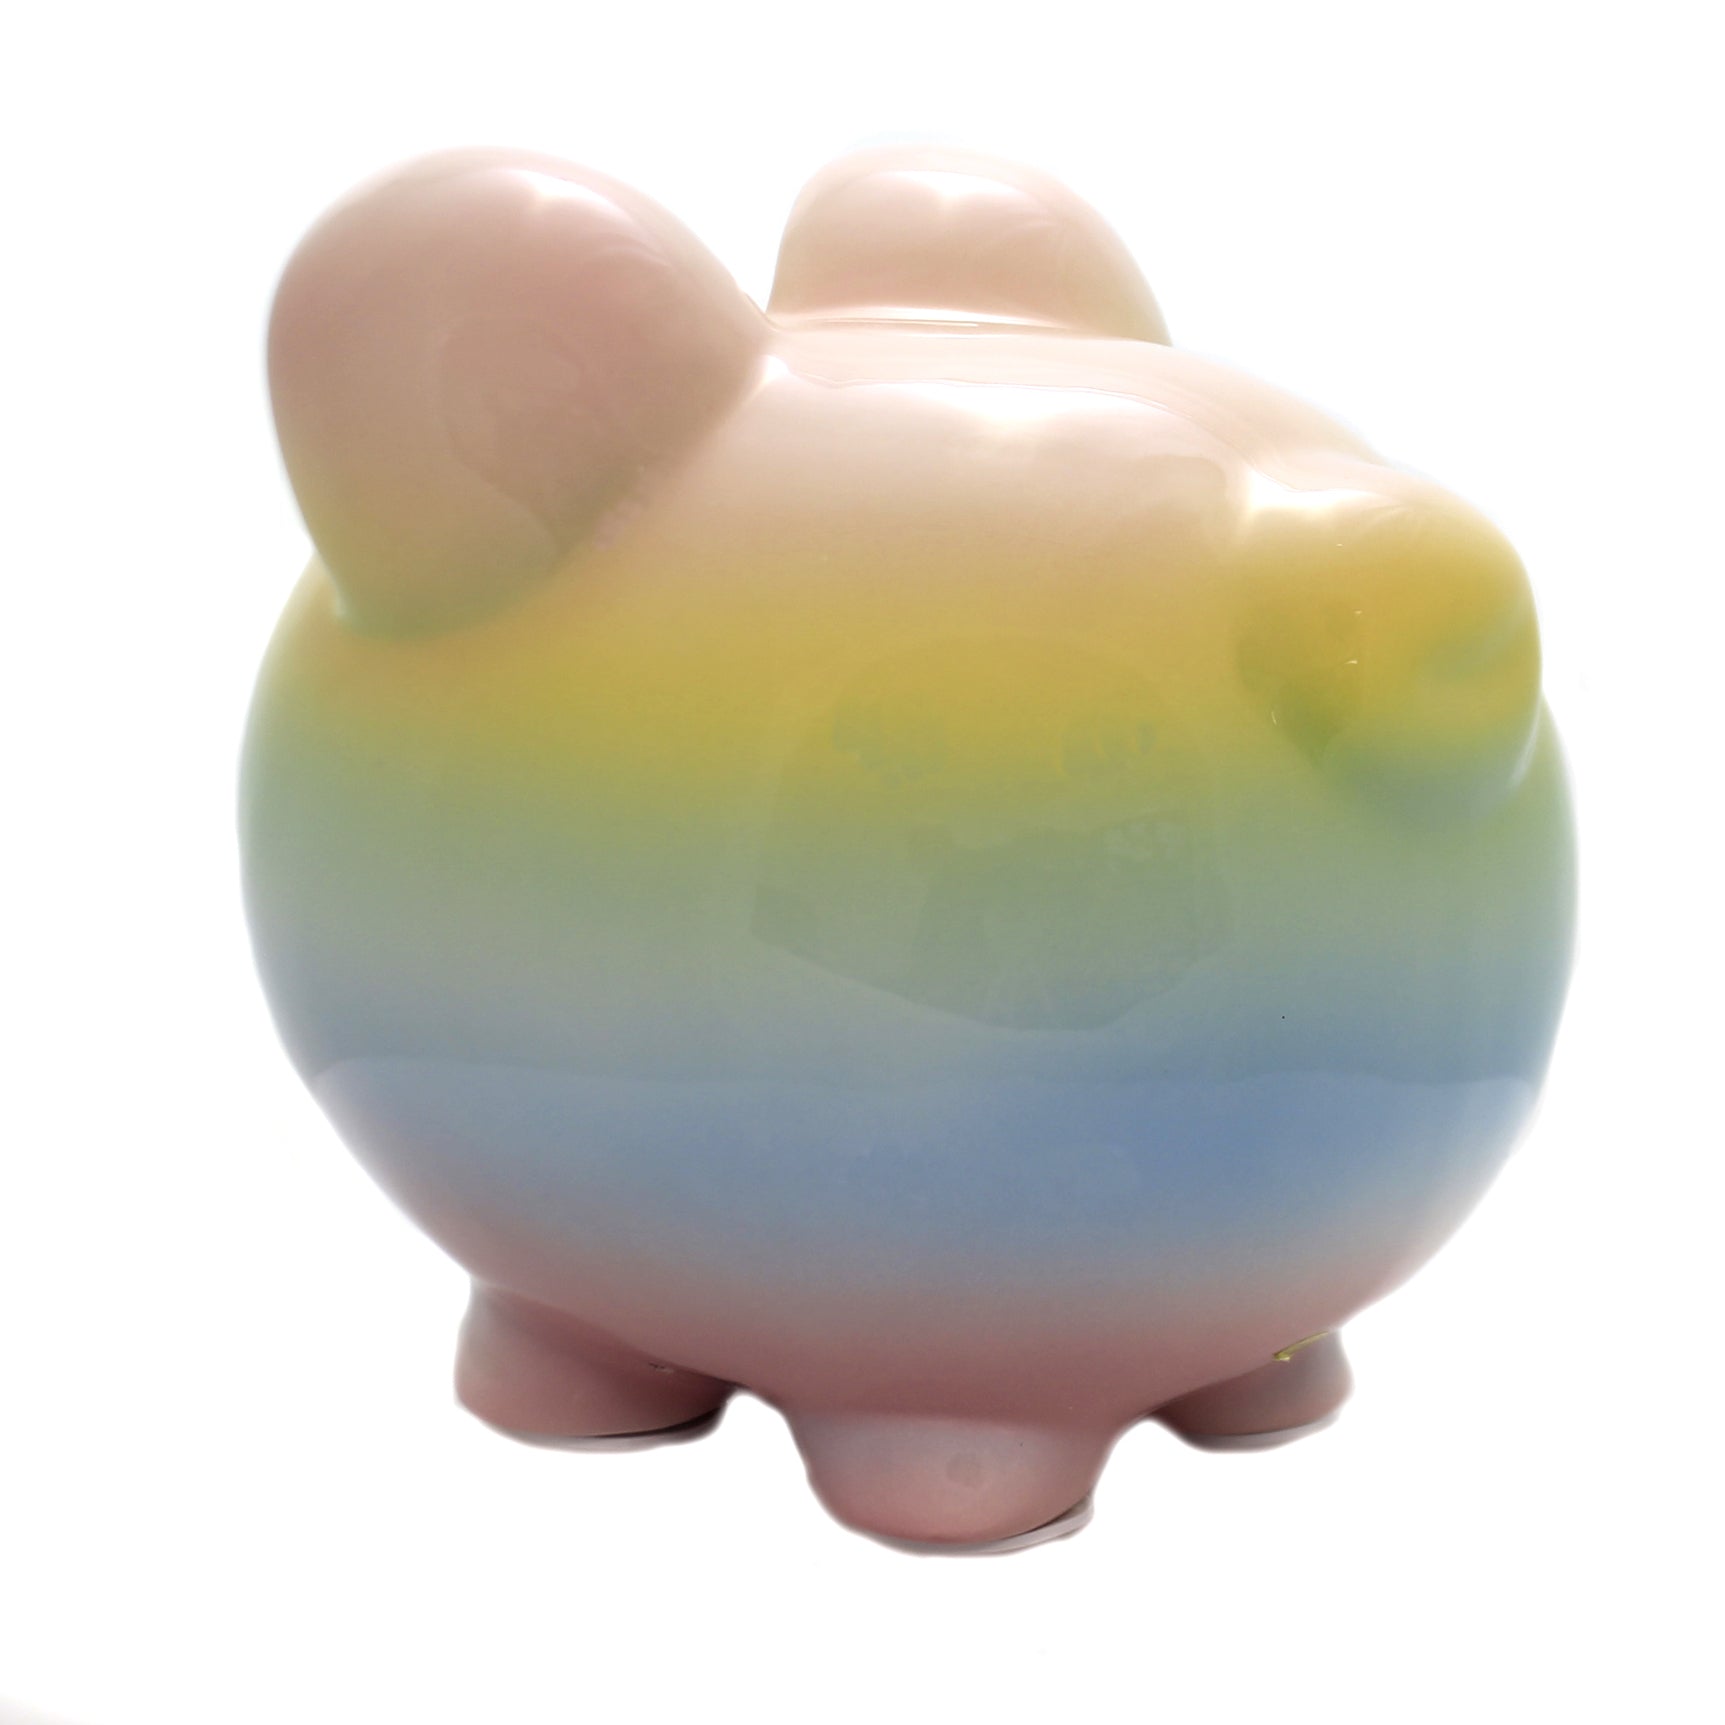 Child To Cherish Rainbow Ombre Bank - One Bank 7.75 Inch, Ceramic